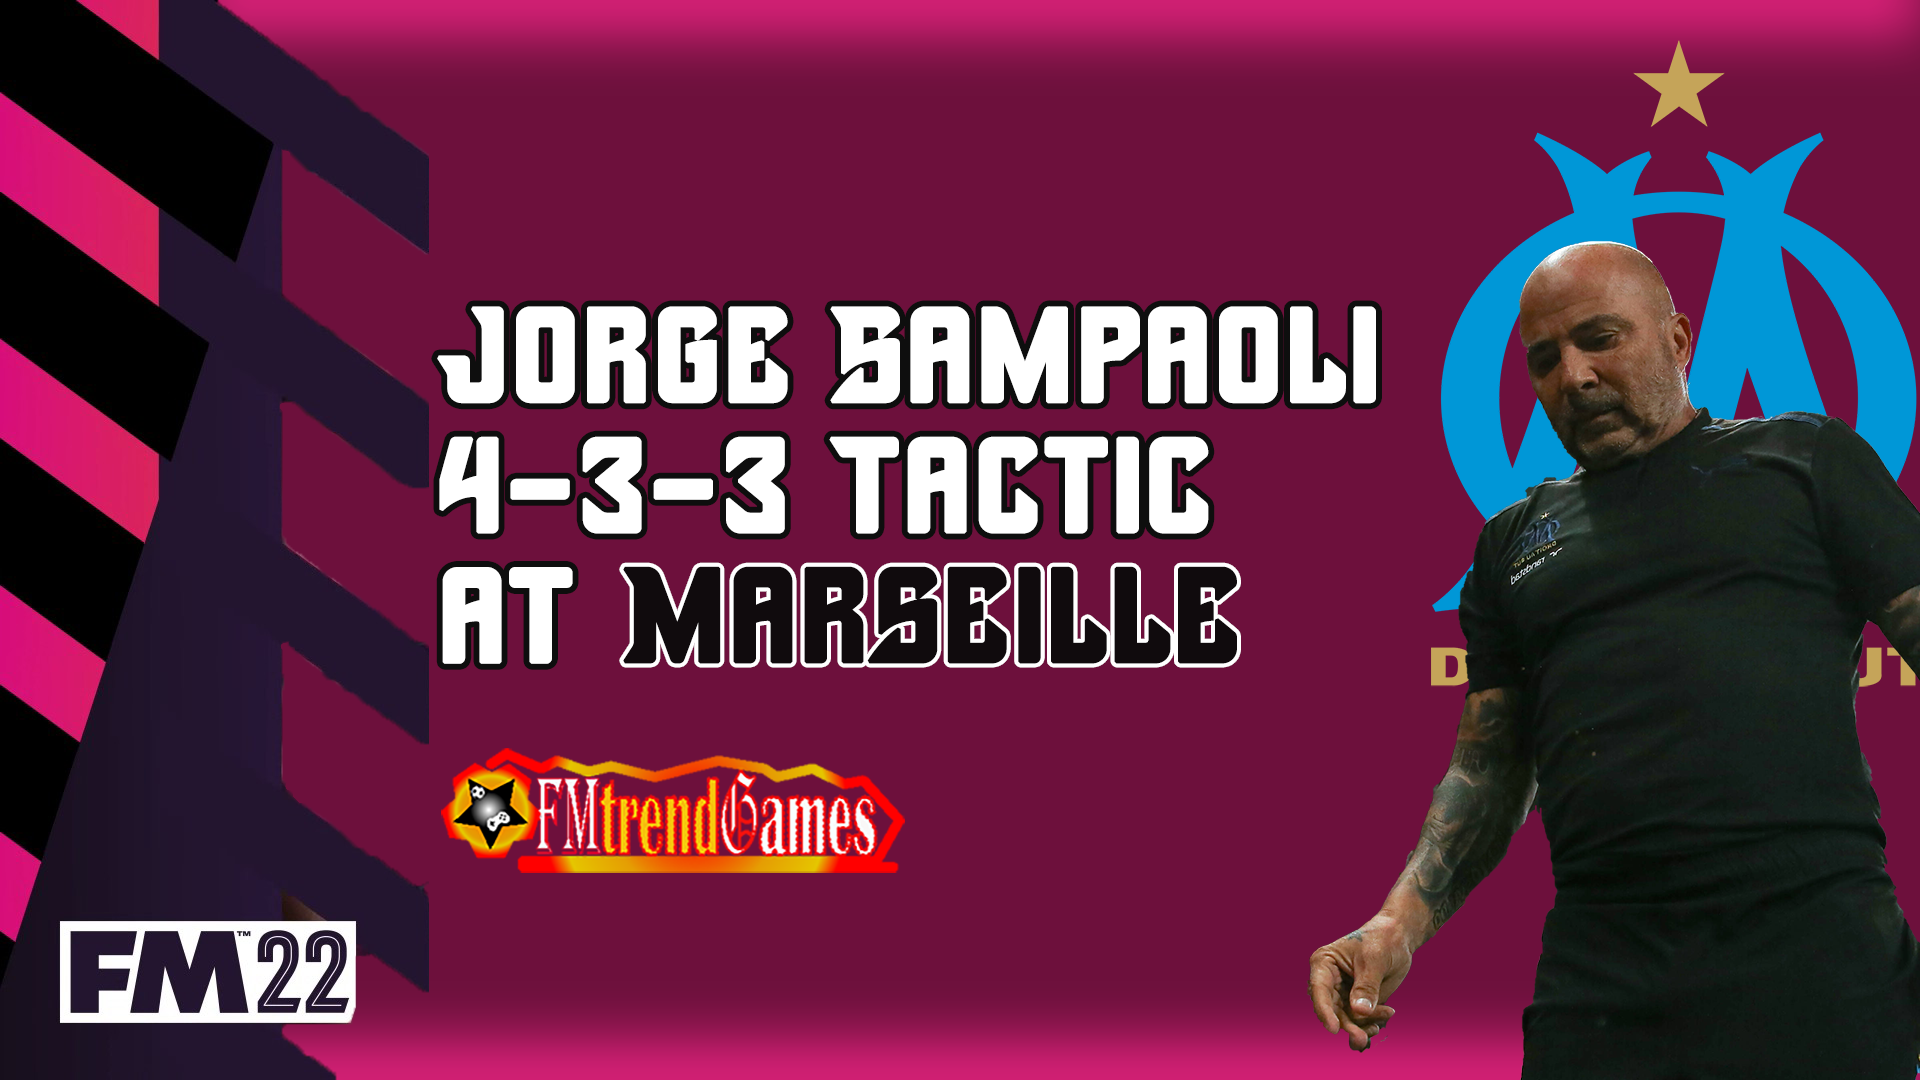 Jorge Sampaoli 4-3-3 Tactic